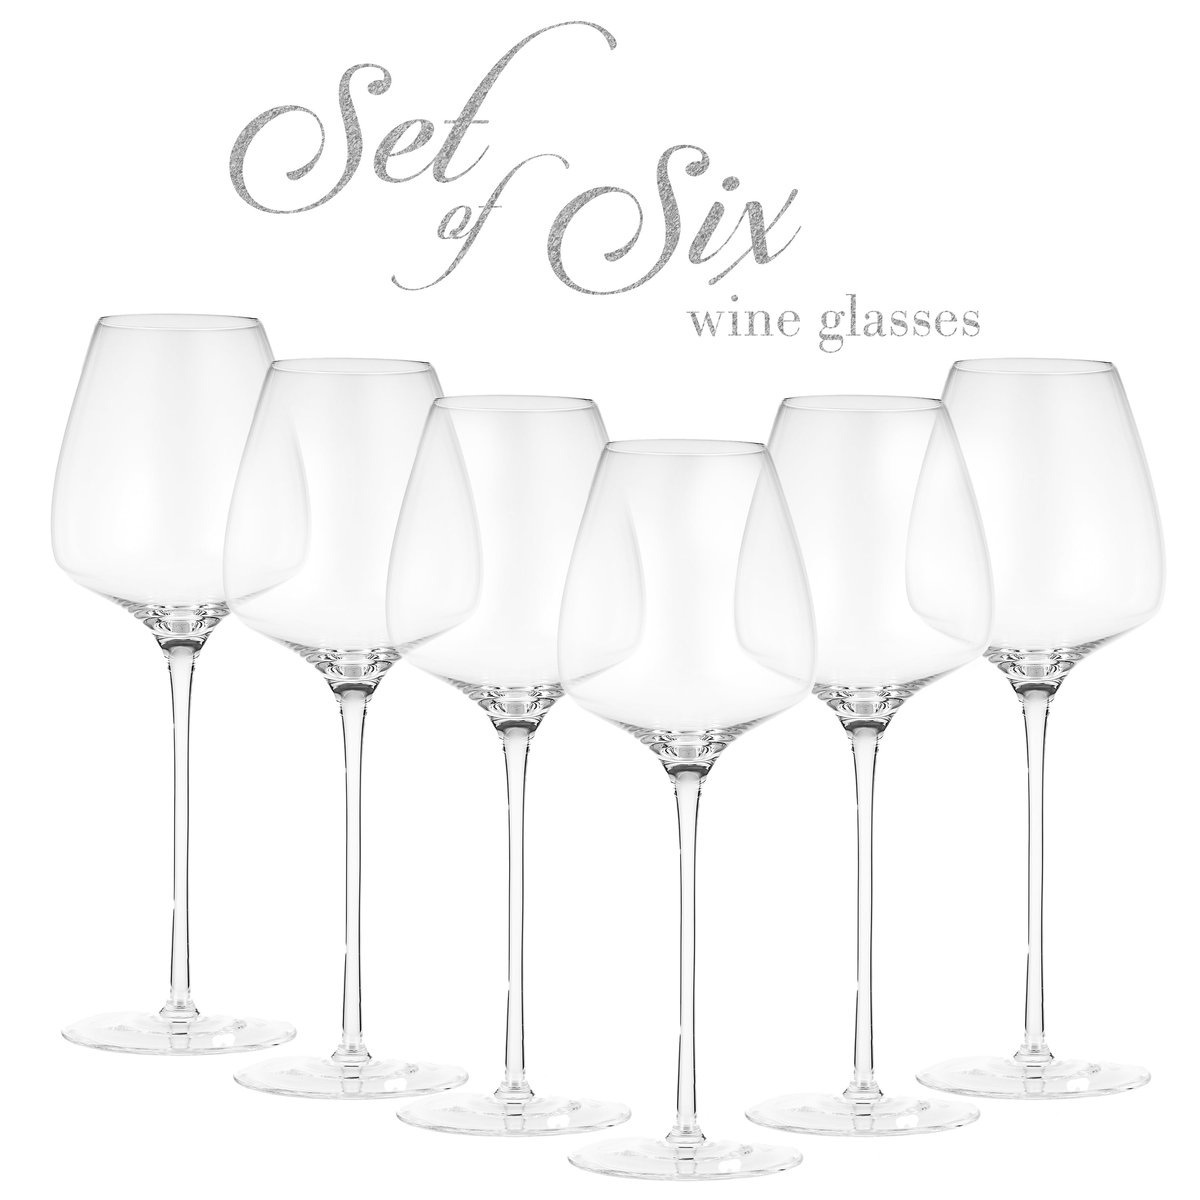 https://images.verishop.com/berkware-classic-white-wine-glass-set-of-6/M00810026178238-1782832531?auto=format&cs=strip&fit=max&w=1200